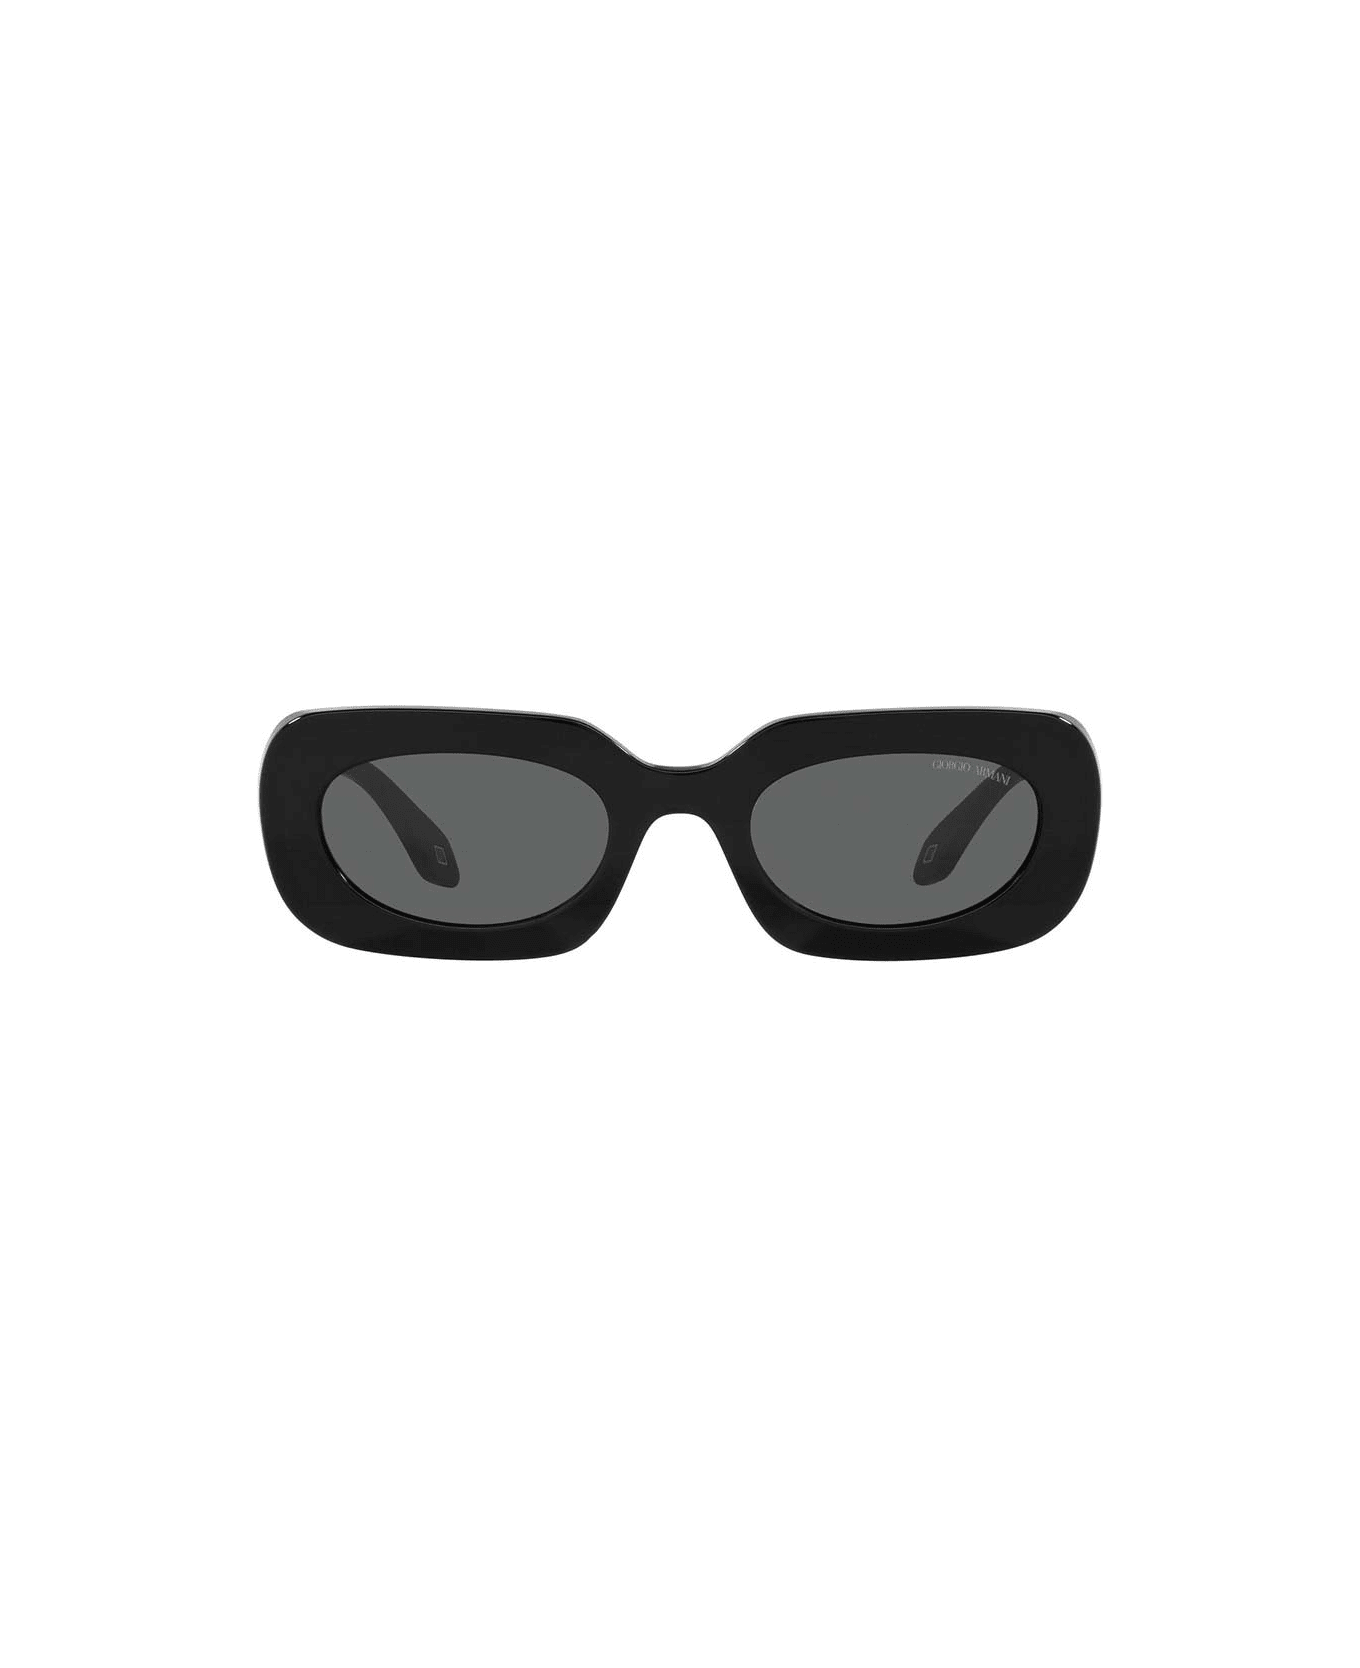 Giorgio Armani Sunglasses - Nero/Nero アイウェア